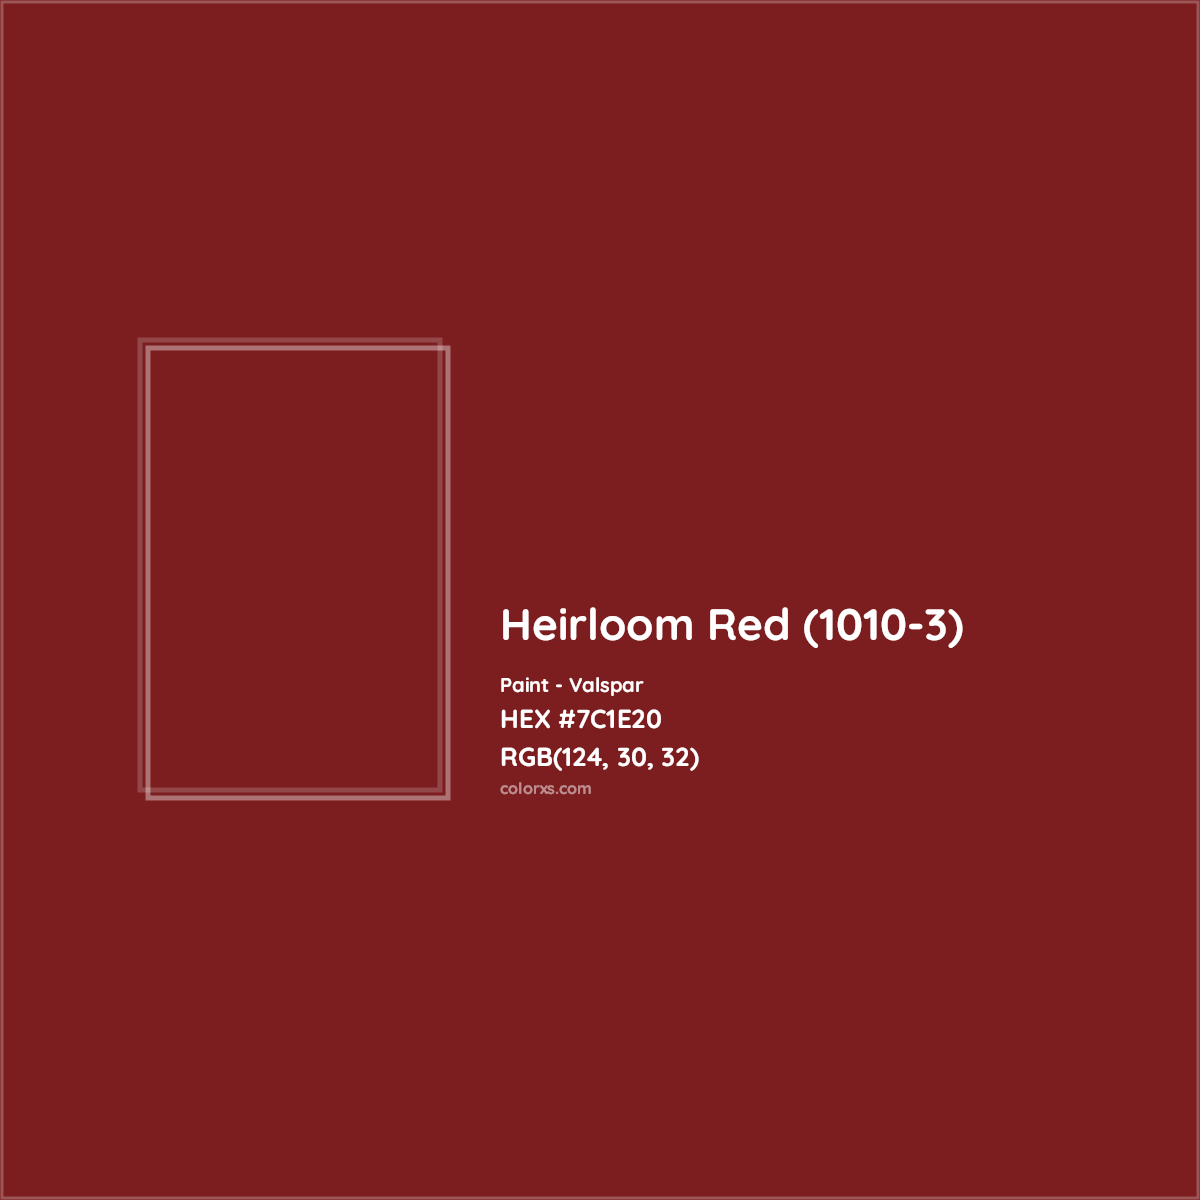 HEX #7C1E20 Heirloom Red (1010-3) Paint Valspar - Color Code